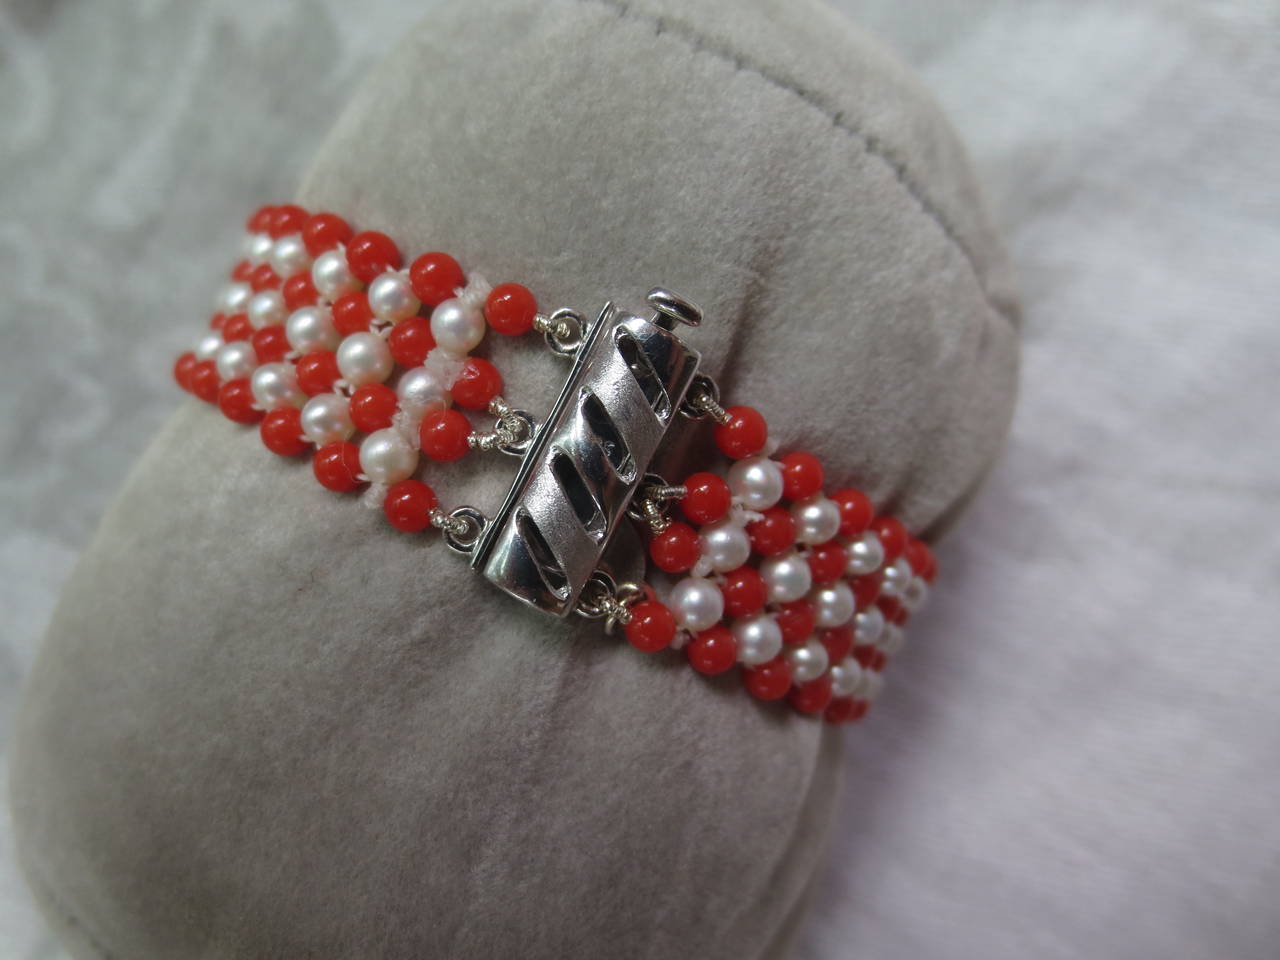 Women's Pearl, Lapis & Coral Bead Bracelet woven in American flag pattern.